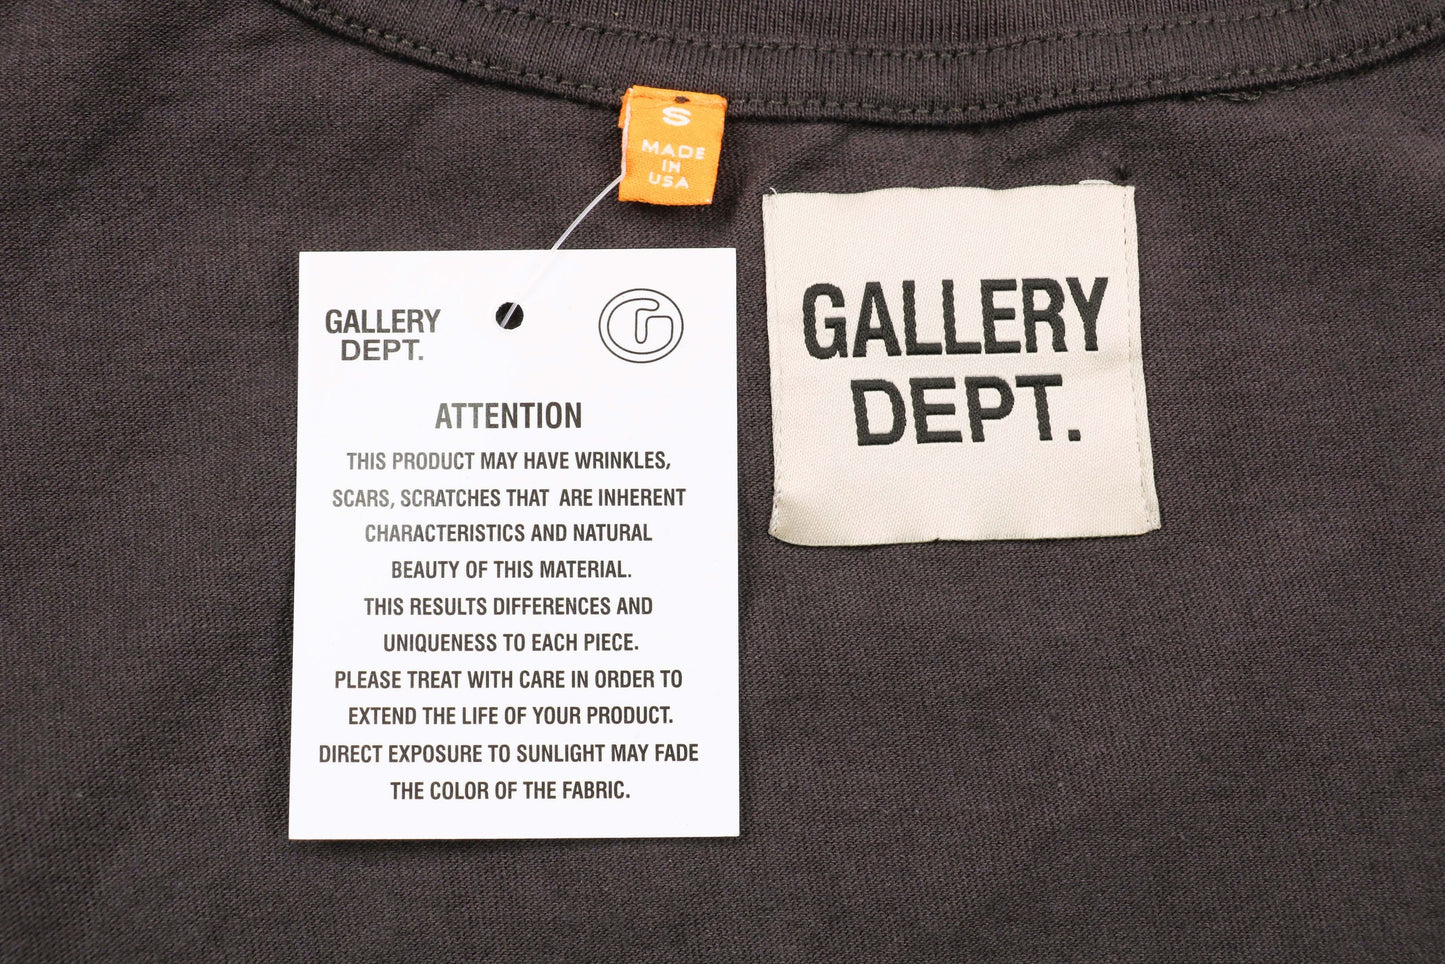 Gallery Dept Skeleton Fuck You Hand T-Shirt